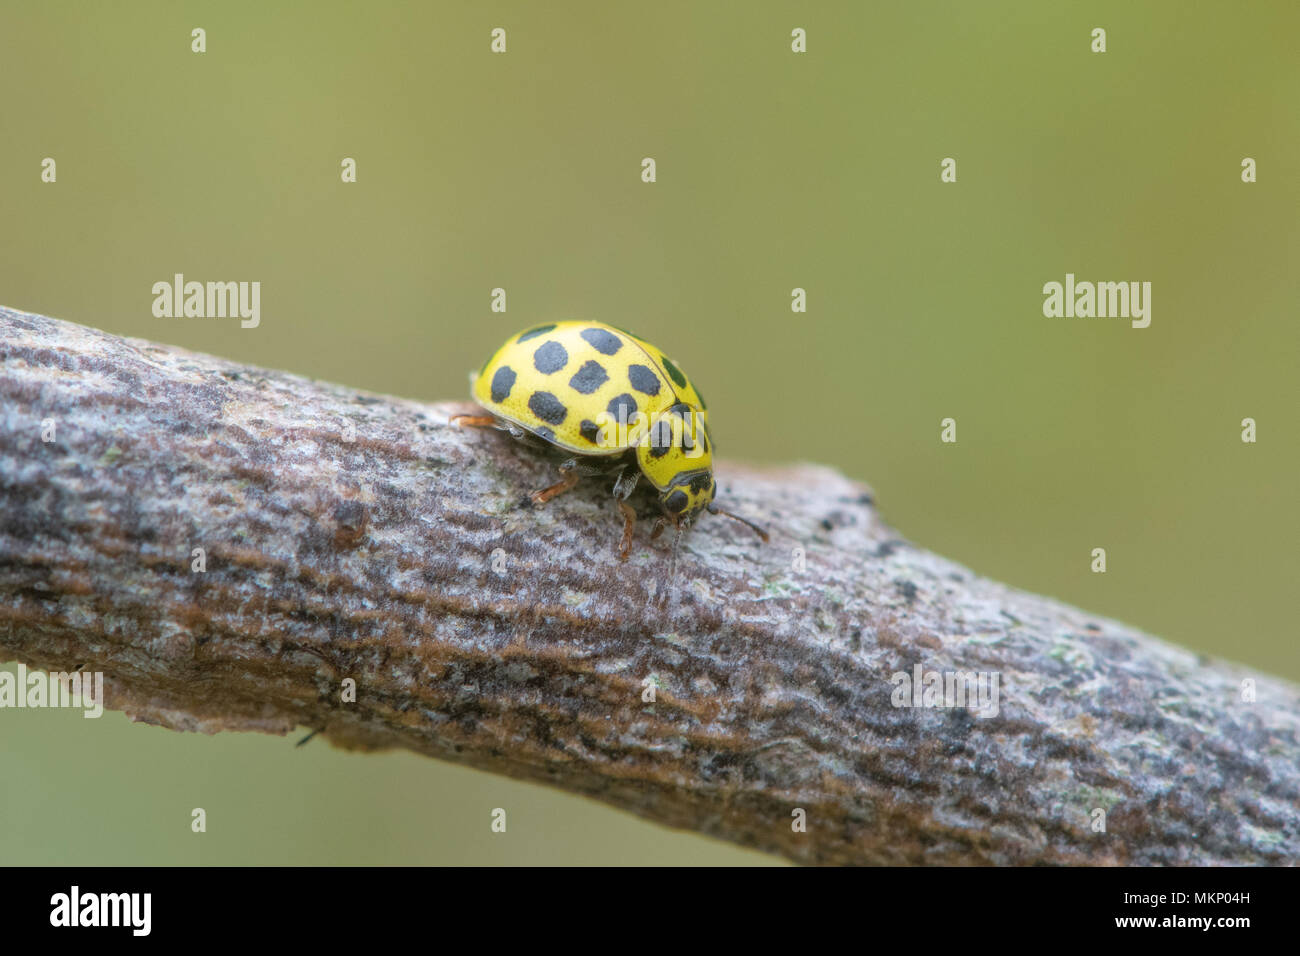 22 mariquita (Psyllobora vigintiduopunctata spot). Escarabajo pequeño de la familia Coccinellidae, alimentándose de moho Foto de stock